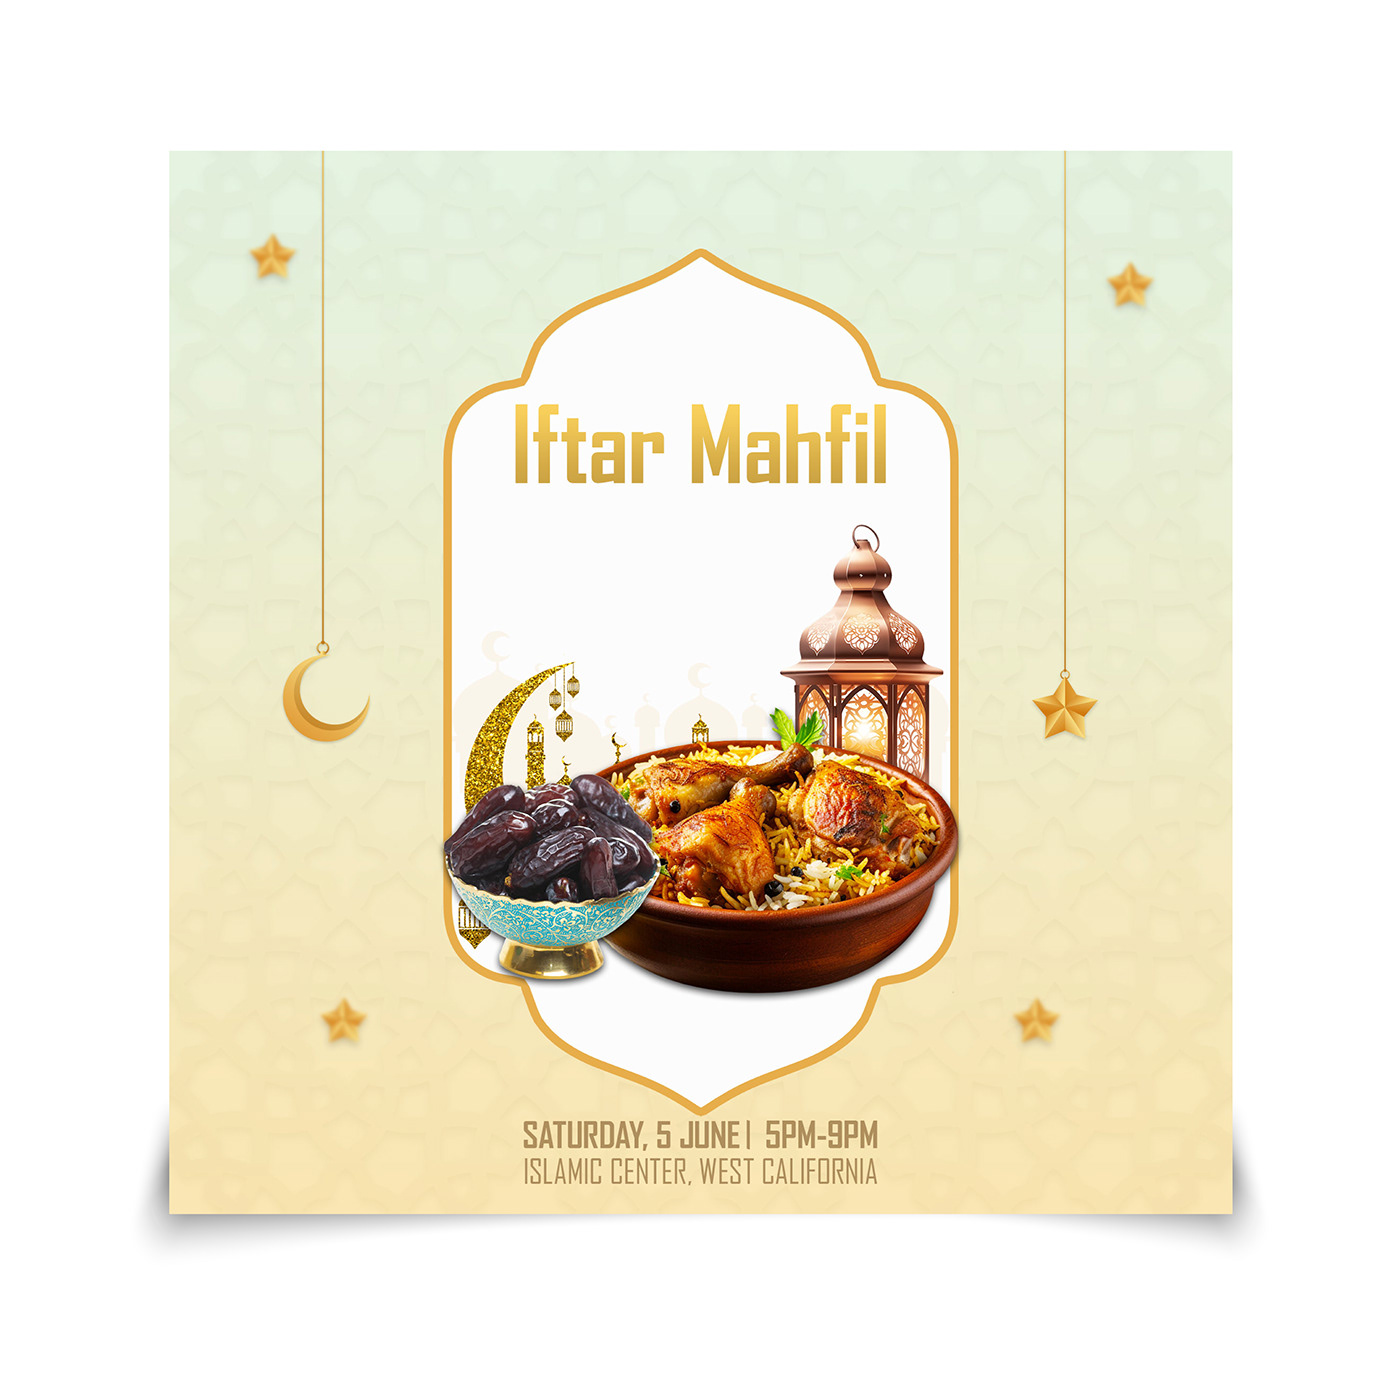 A Ramadan Kareem food Food Social Media Poster Design could feature a close-up photograph of a juicy